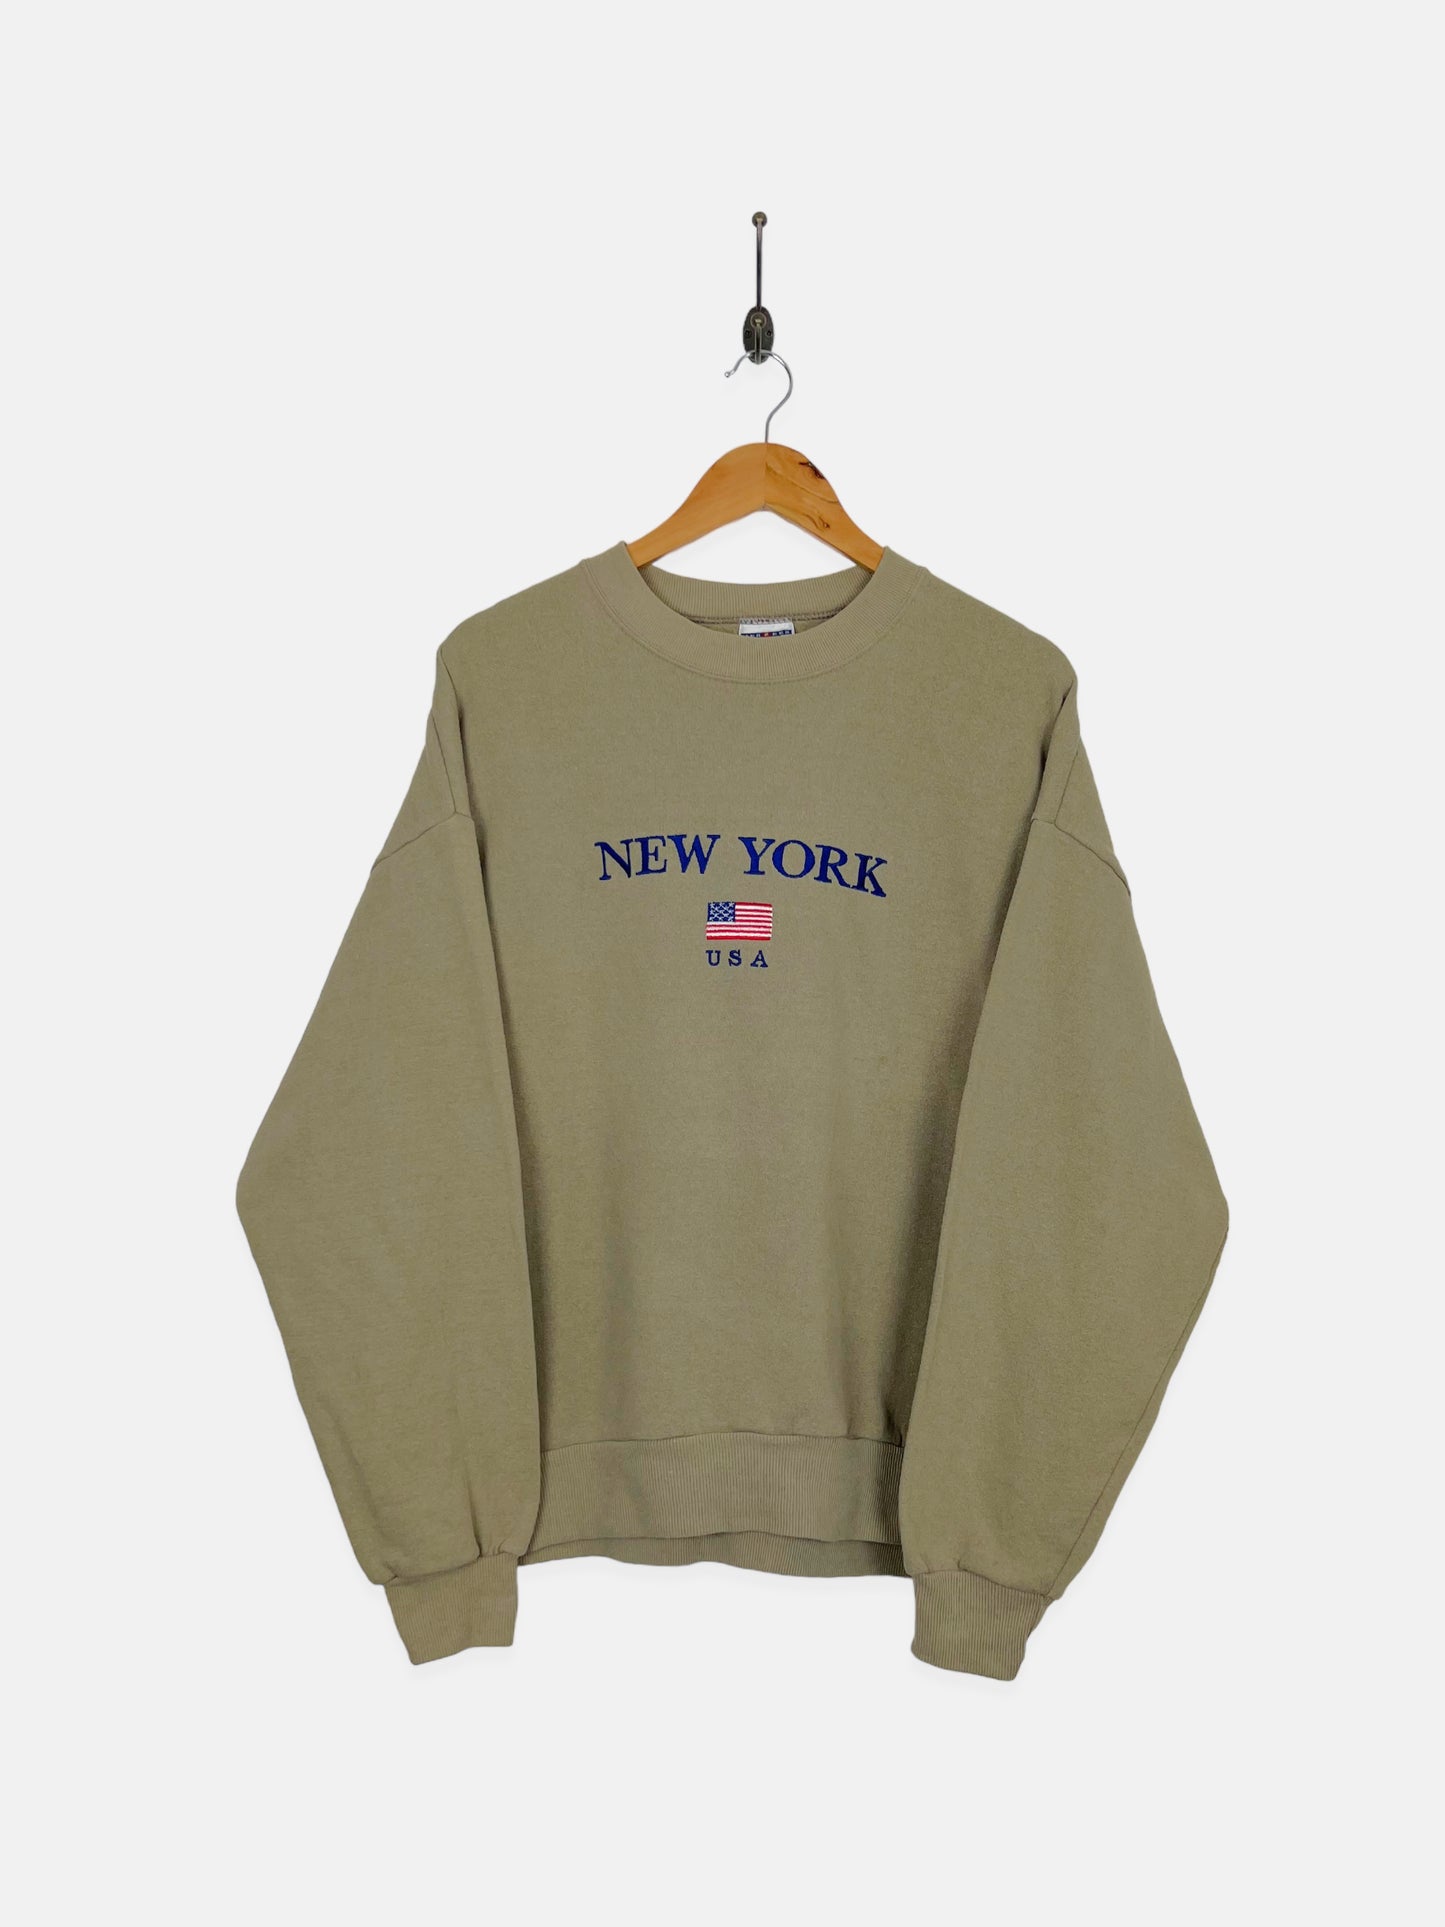 90's New York USA Embroidered Vintage Sweatshirt Size M-L